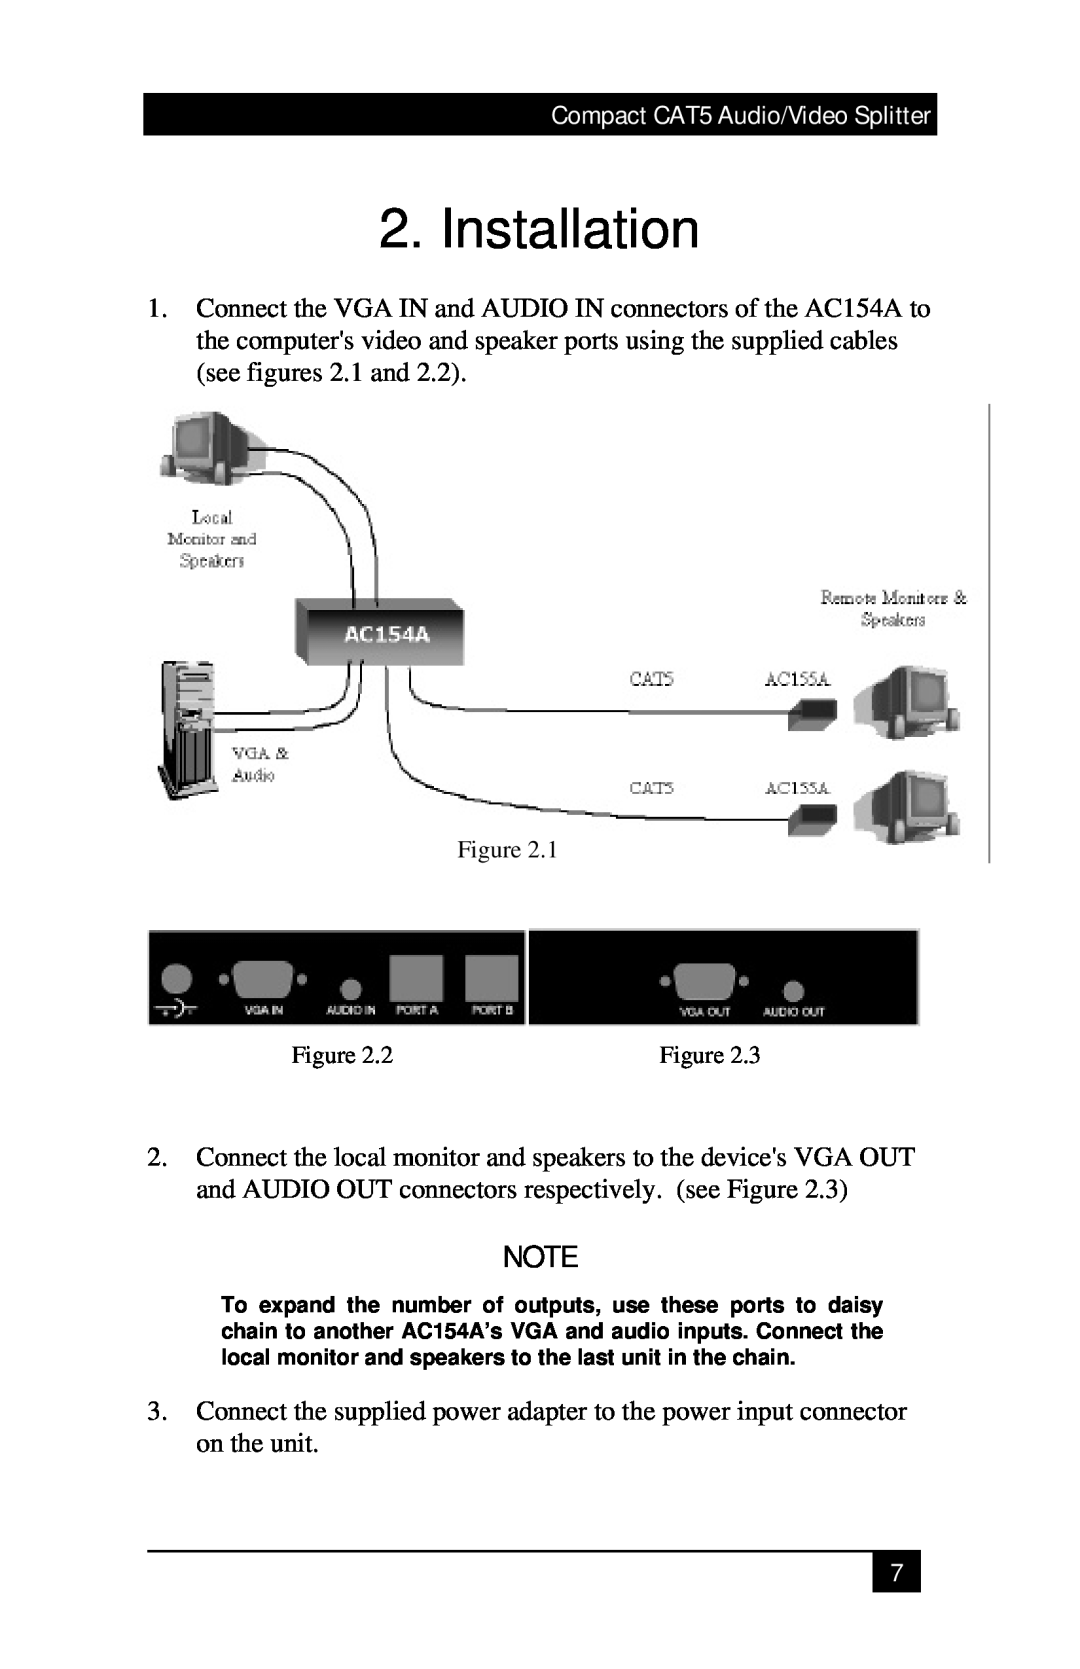 Black Box AC154A-2, COMPACT CAT5 AUDIO/VIDEO SPLITTERS manual Installation, Compact CAT5 Audio/Video Splitter 